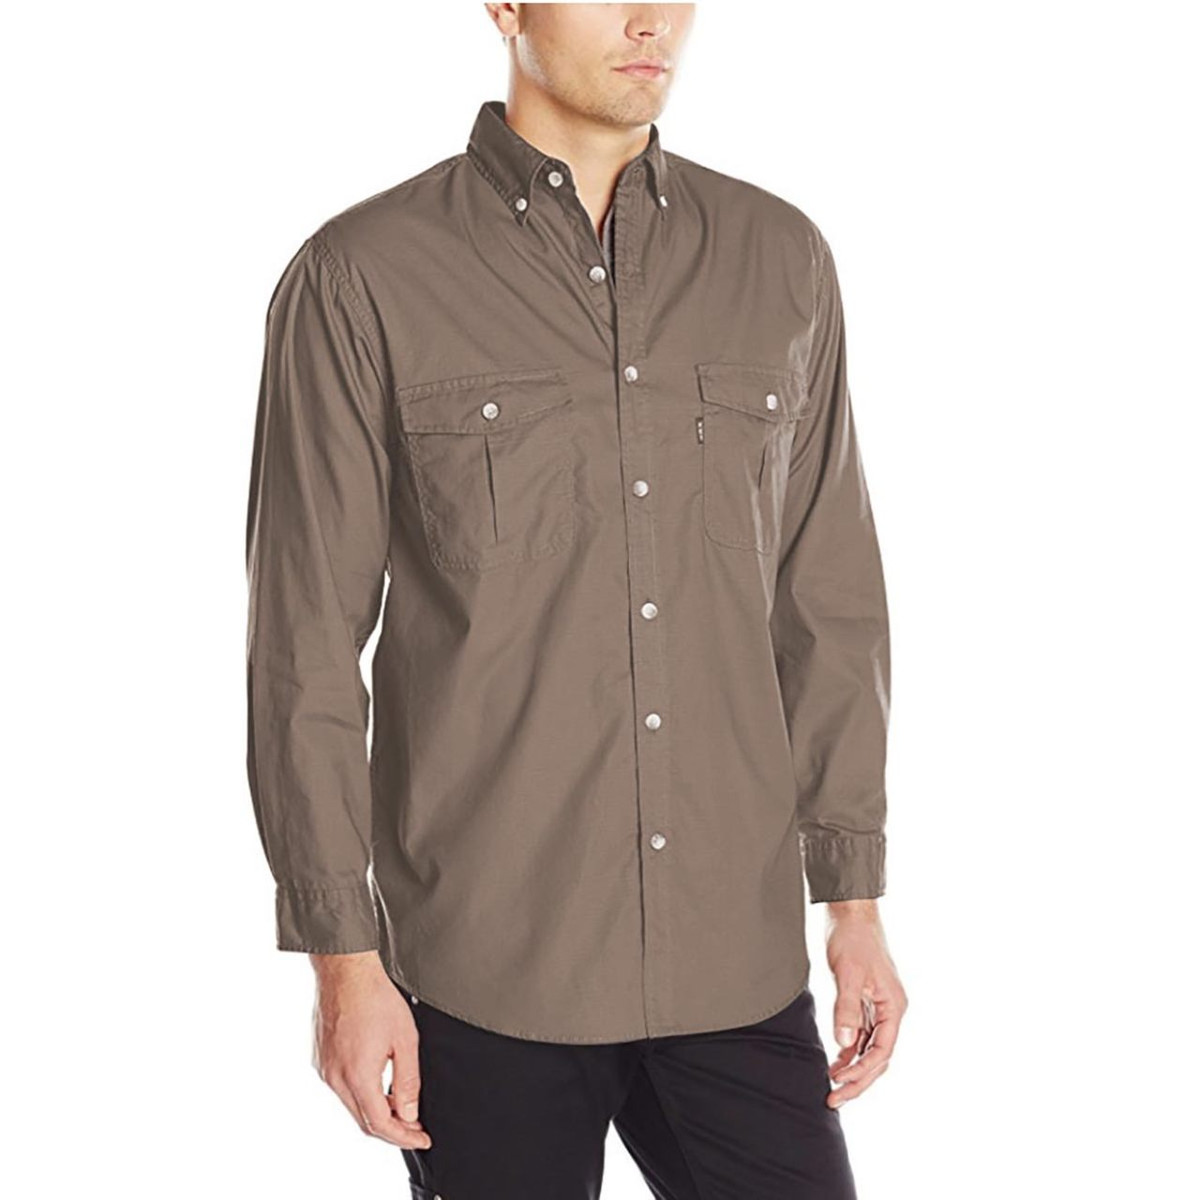 KEY Industries Long Sleeve Rip Stop Shirt 532 - Graphite - 2XL